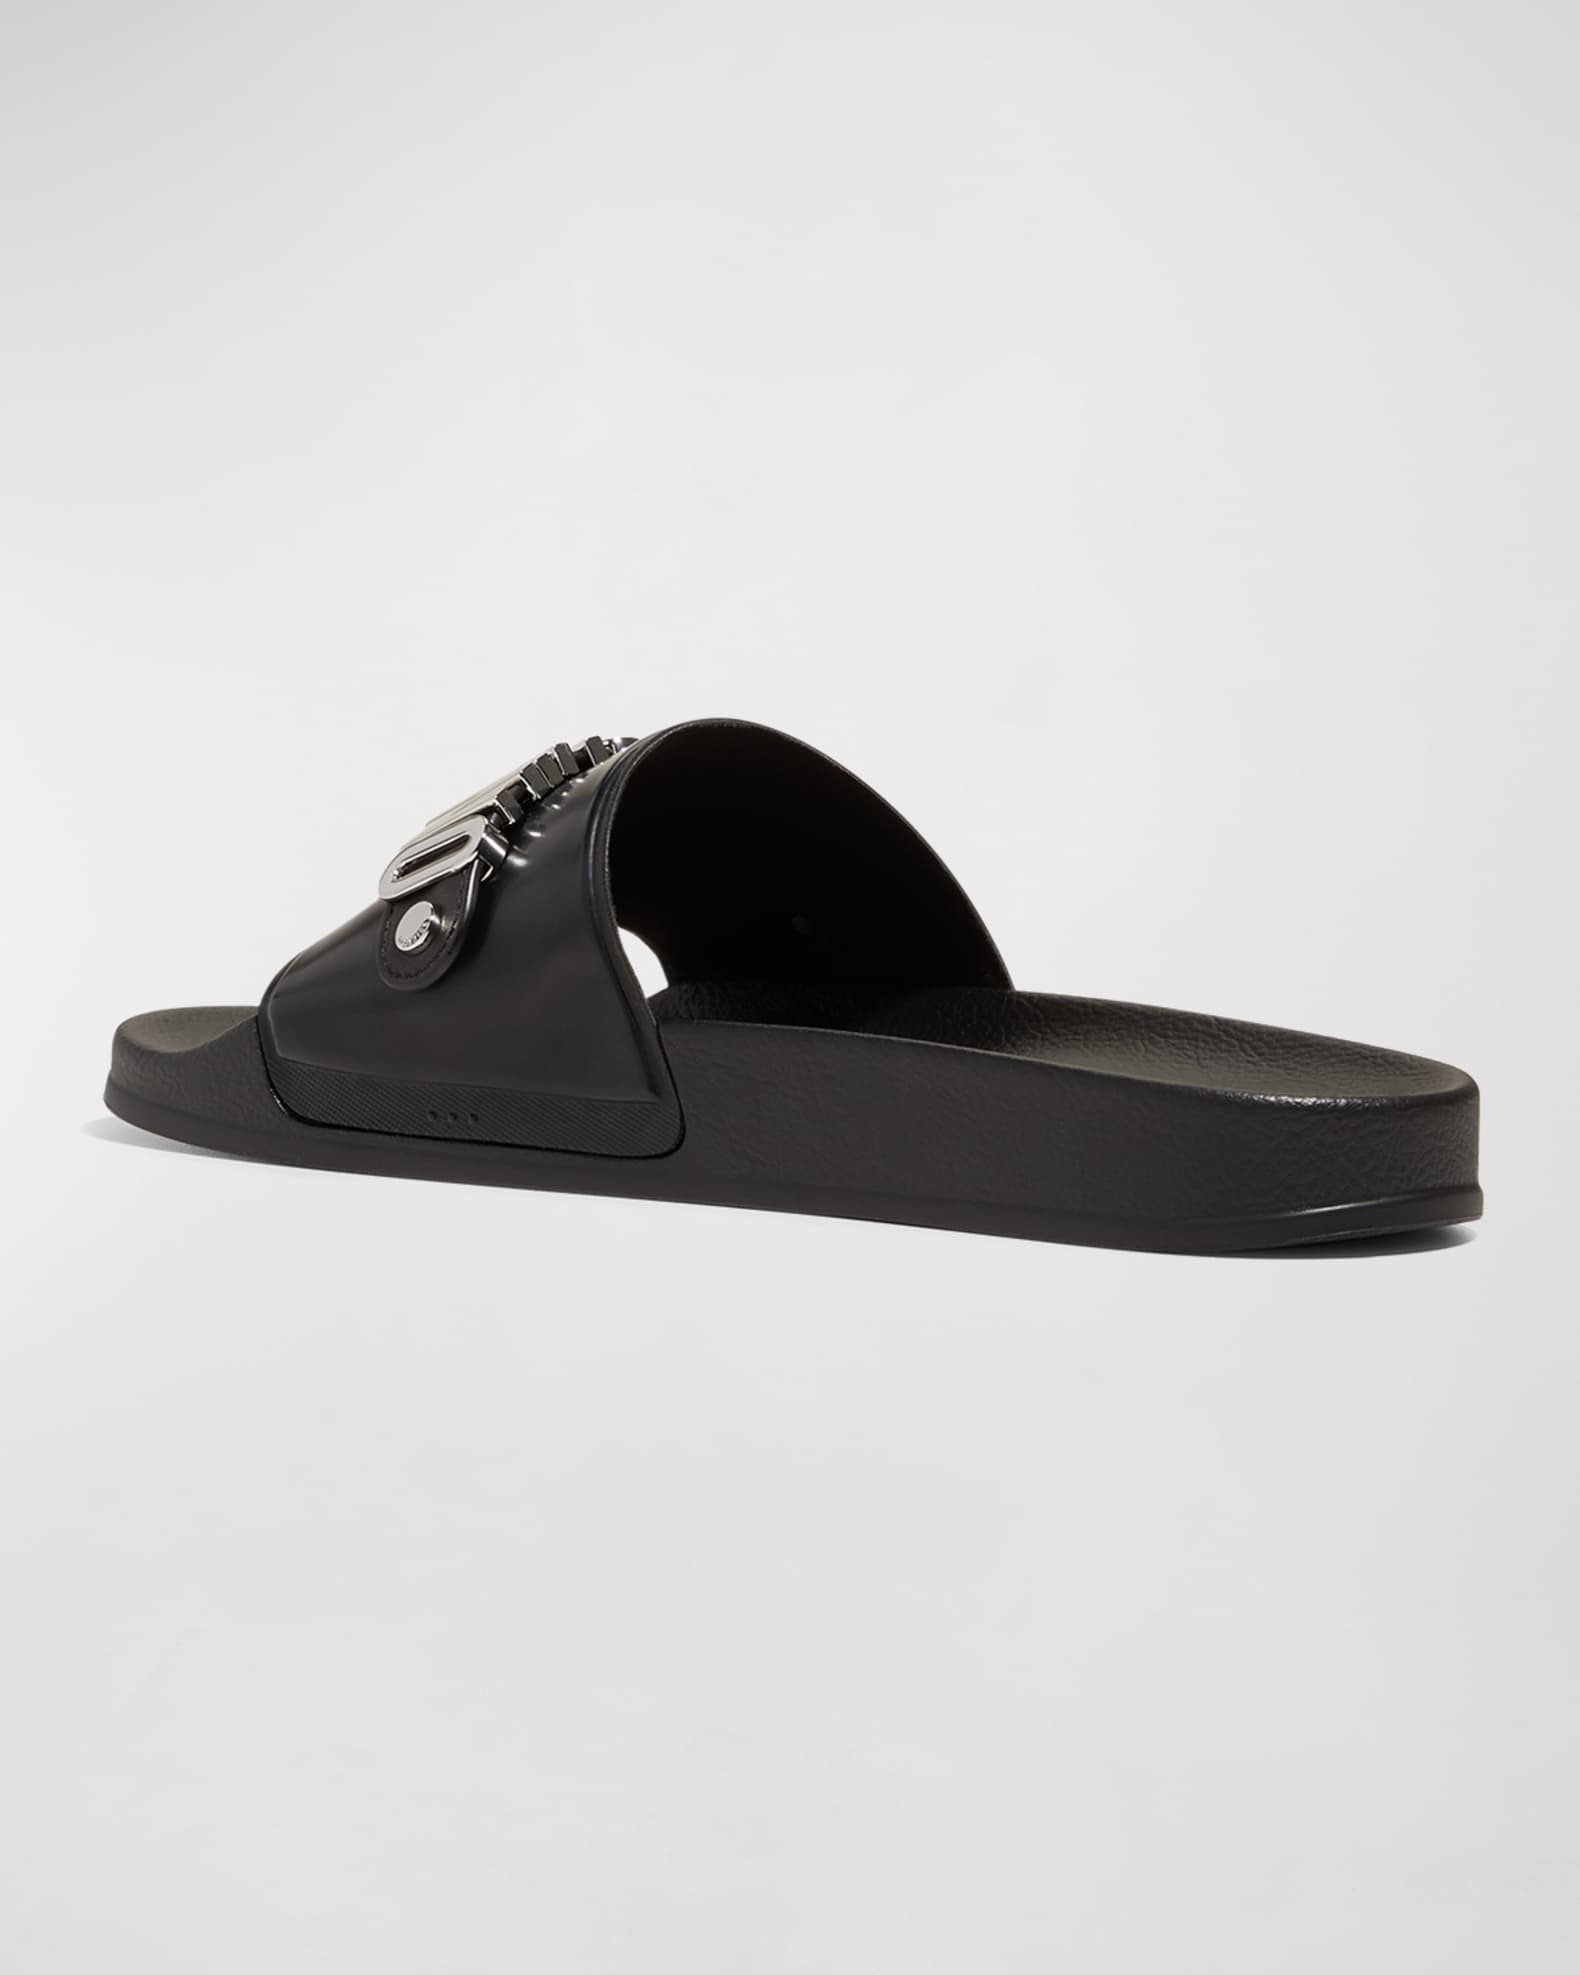 Moschino Men's Rubber Pool Slide Sandals w/ Metal Logo | Neiman Marcus